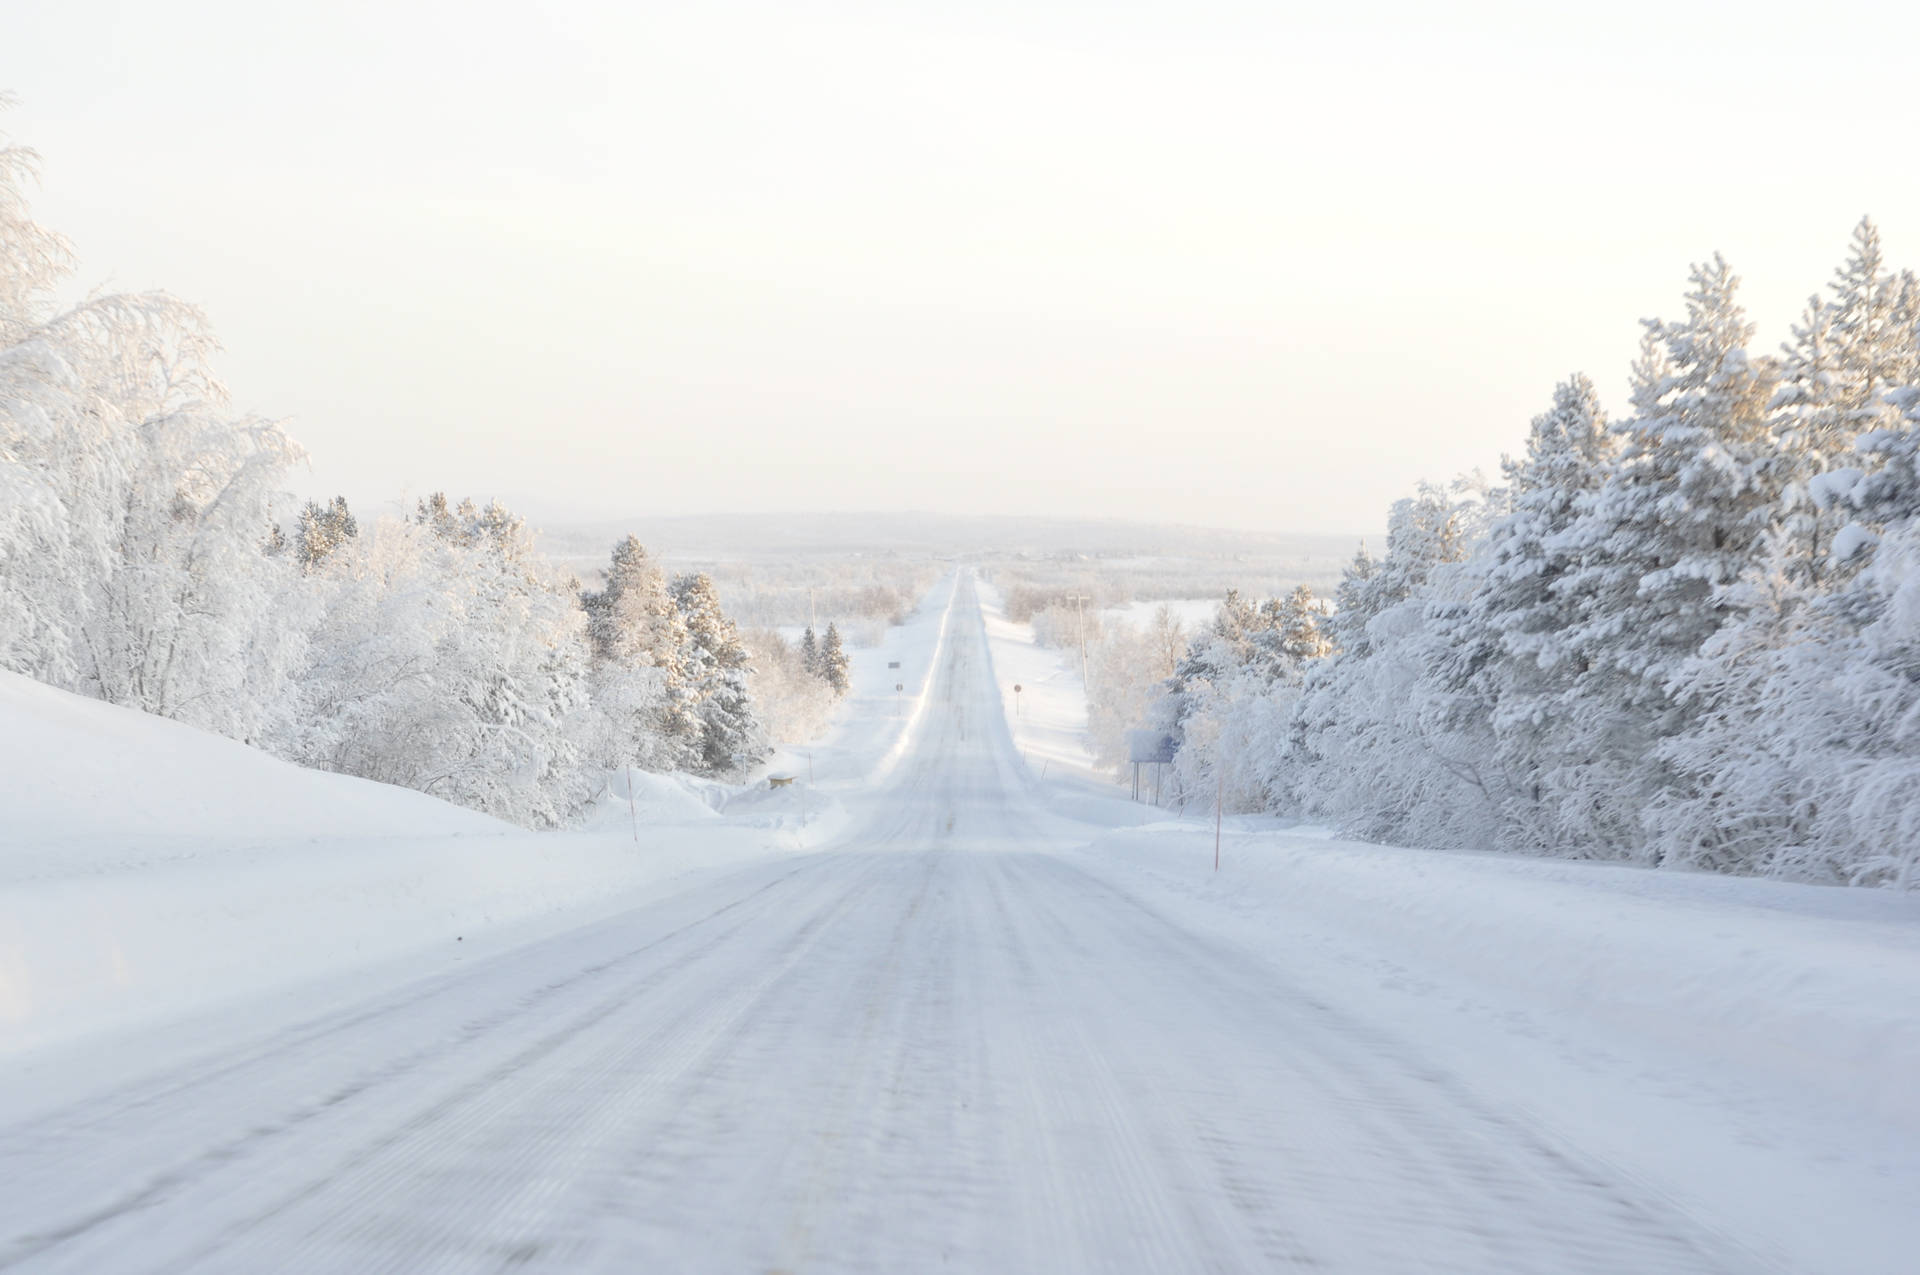 Snowy Finland Scenic Drive Route Background